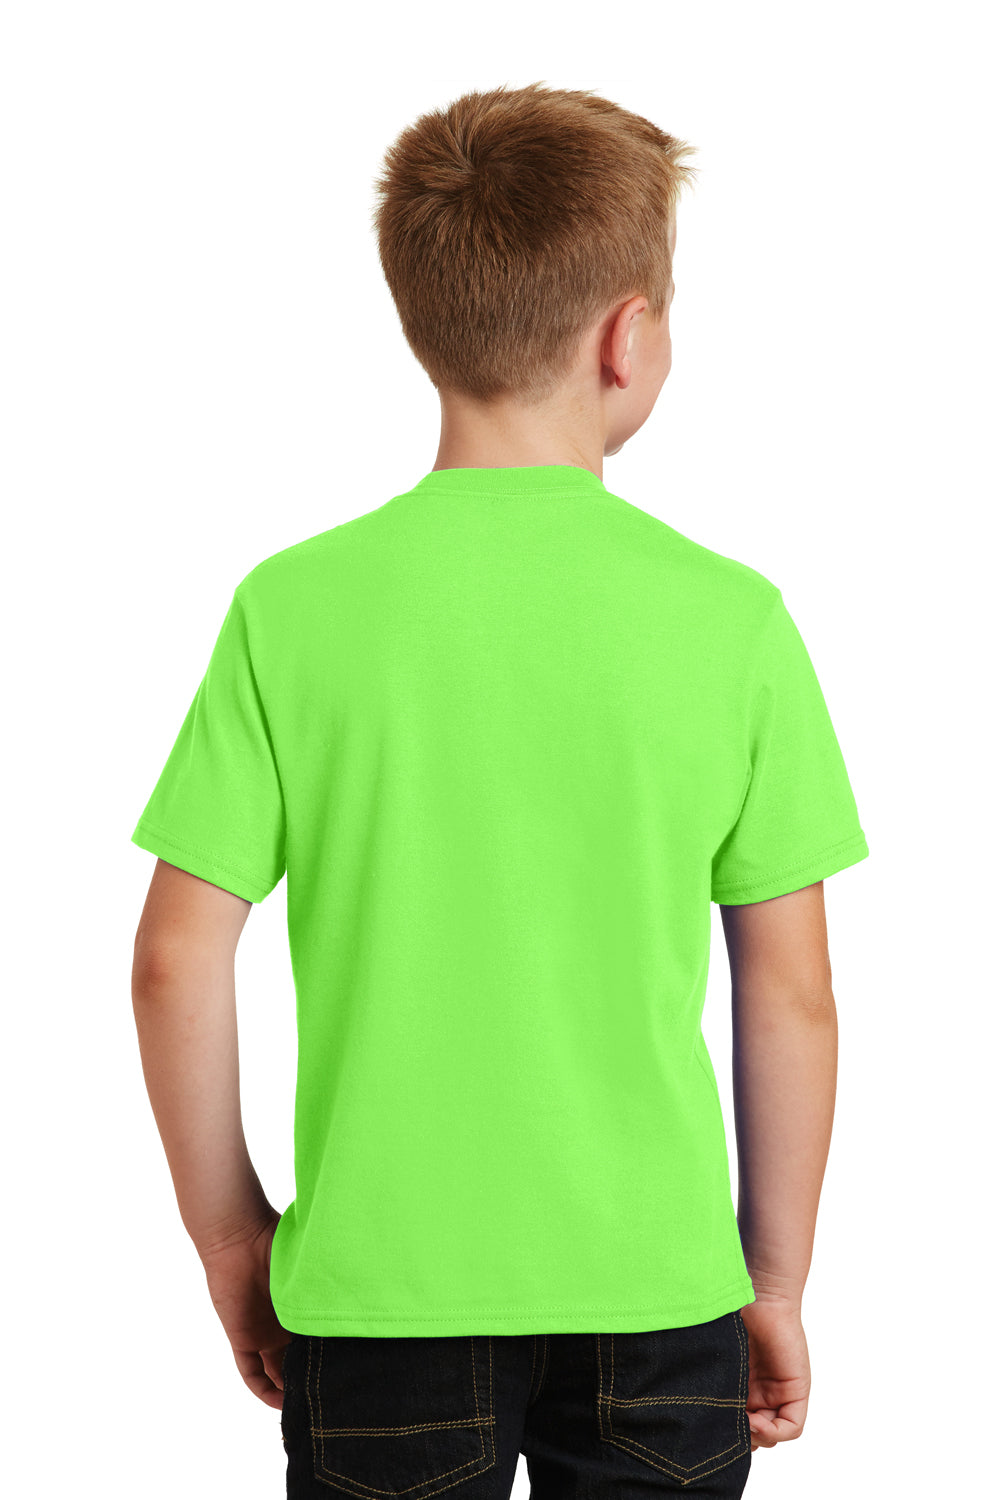 Port & Company PC450Y Youth Fan Favorite Short Sleeve Crewneck T-Shirt Flash Green Back